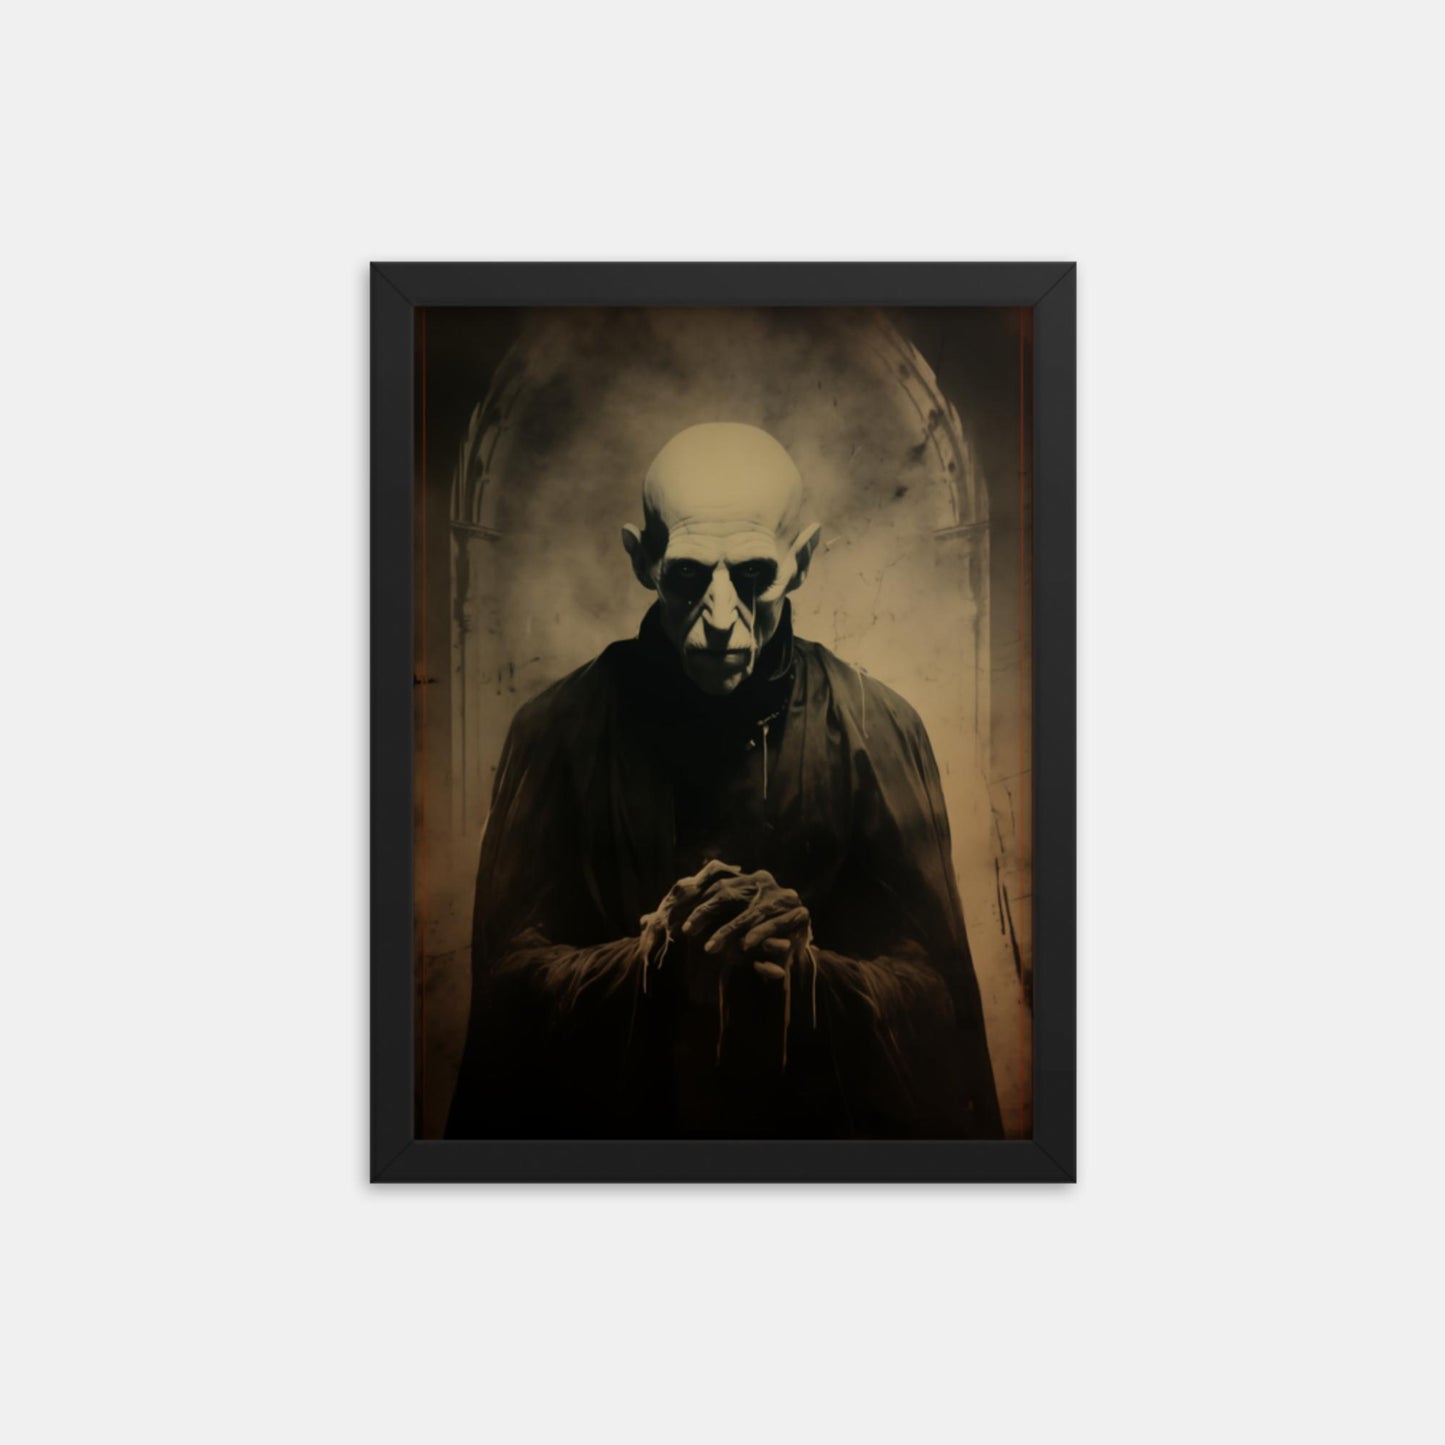 Beware the shadow of Nosferatu, the vampire. Tribute Framed Print